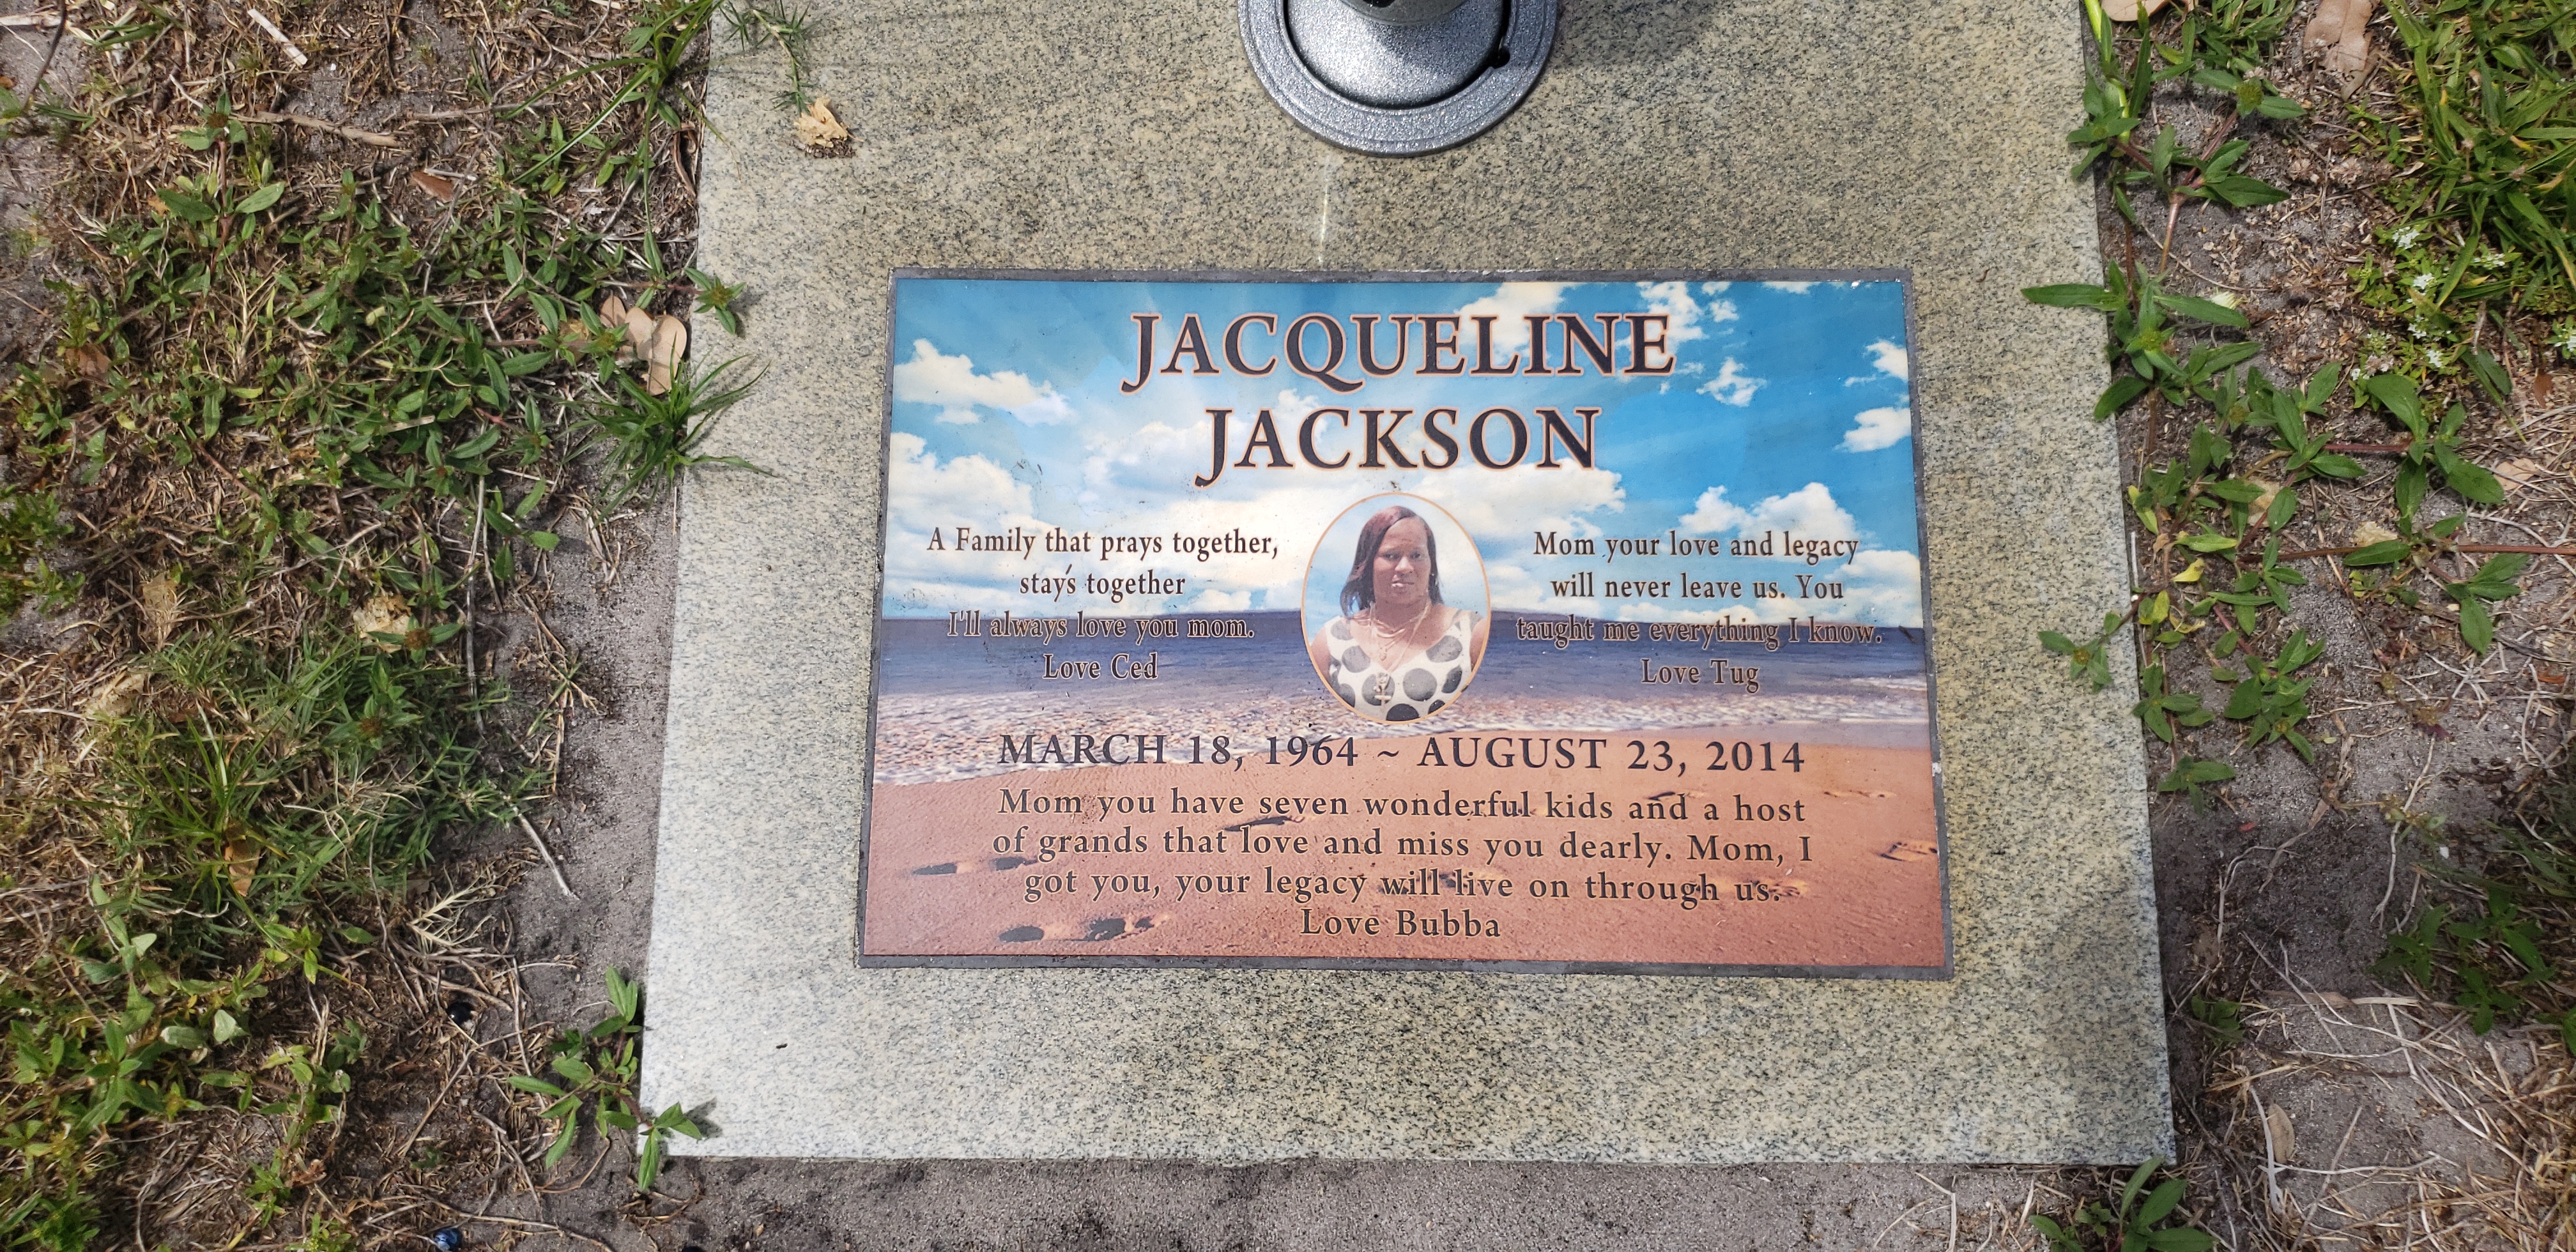 Jacqueline Jackson